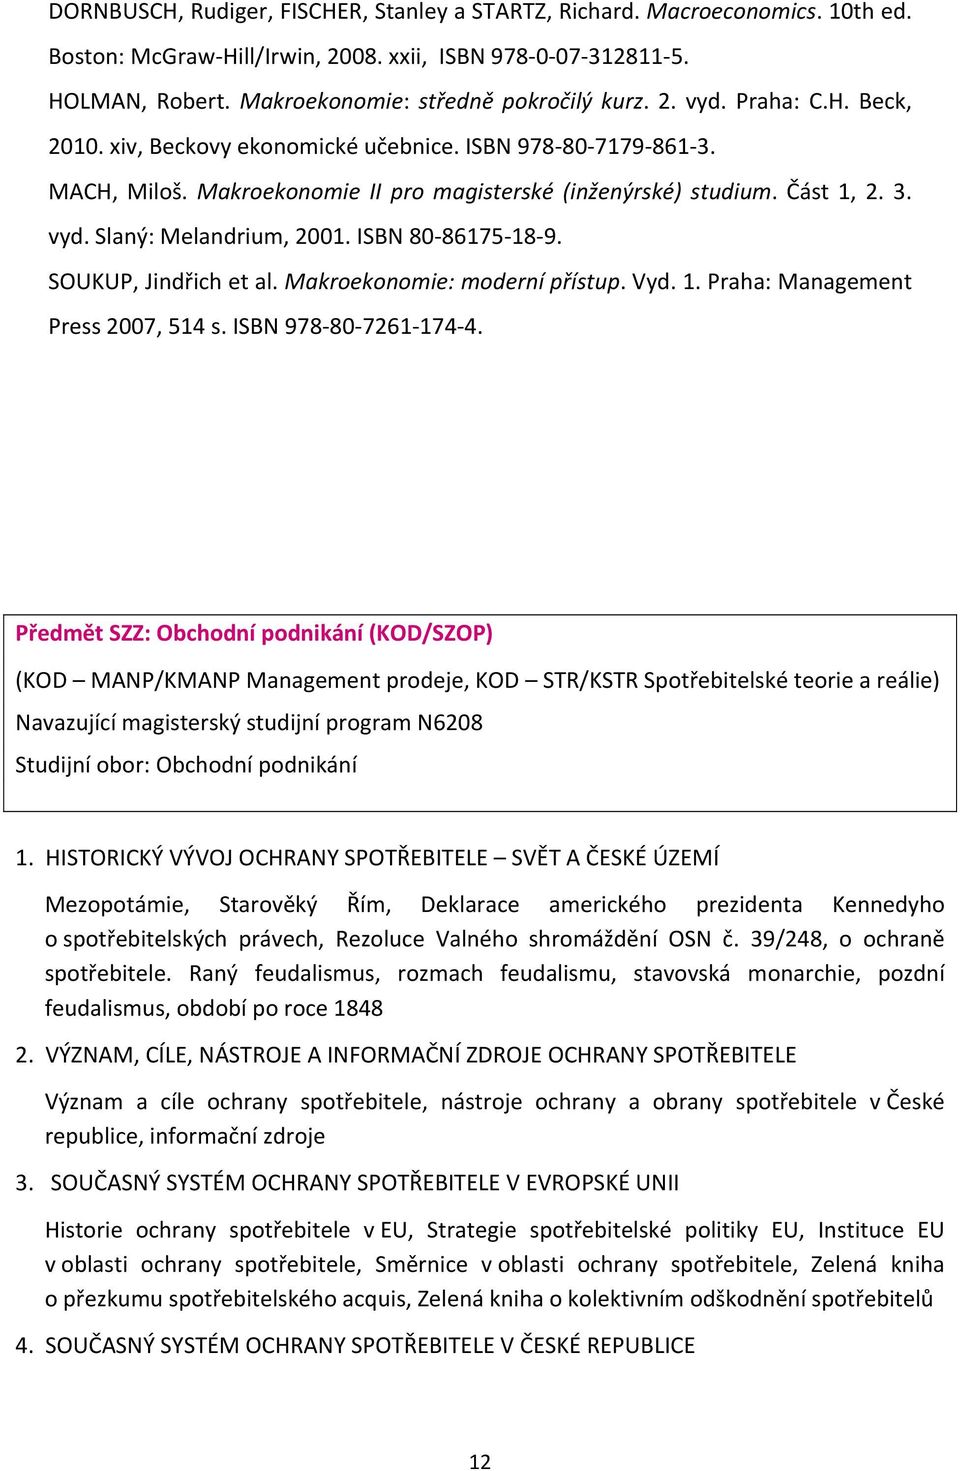 ISBN 80 86175 18 9. SOUKUP, Jindřich et al. Makroekonomie: moderní přístup. Vyd. 1. Praha: Management Press 2007, 514 s. ISBN 978 80 7261 174 4.